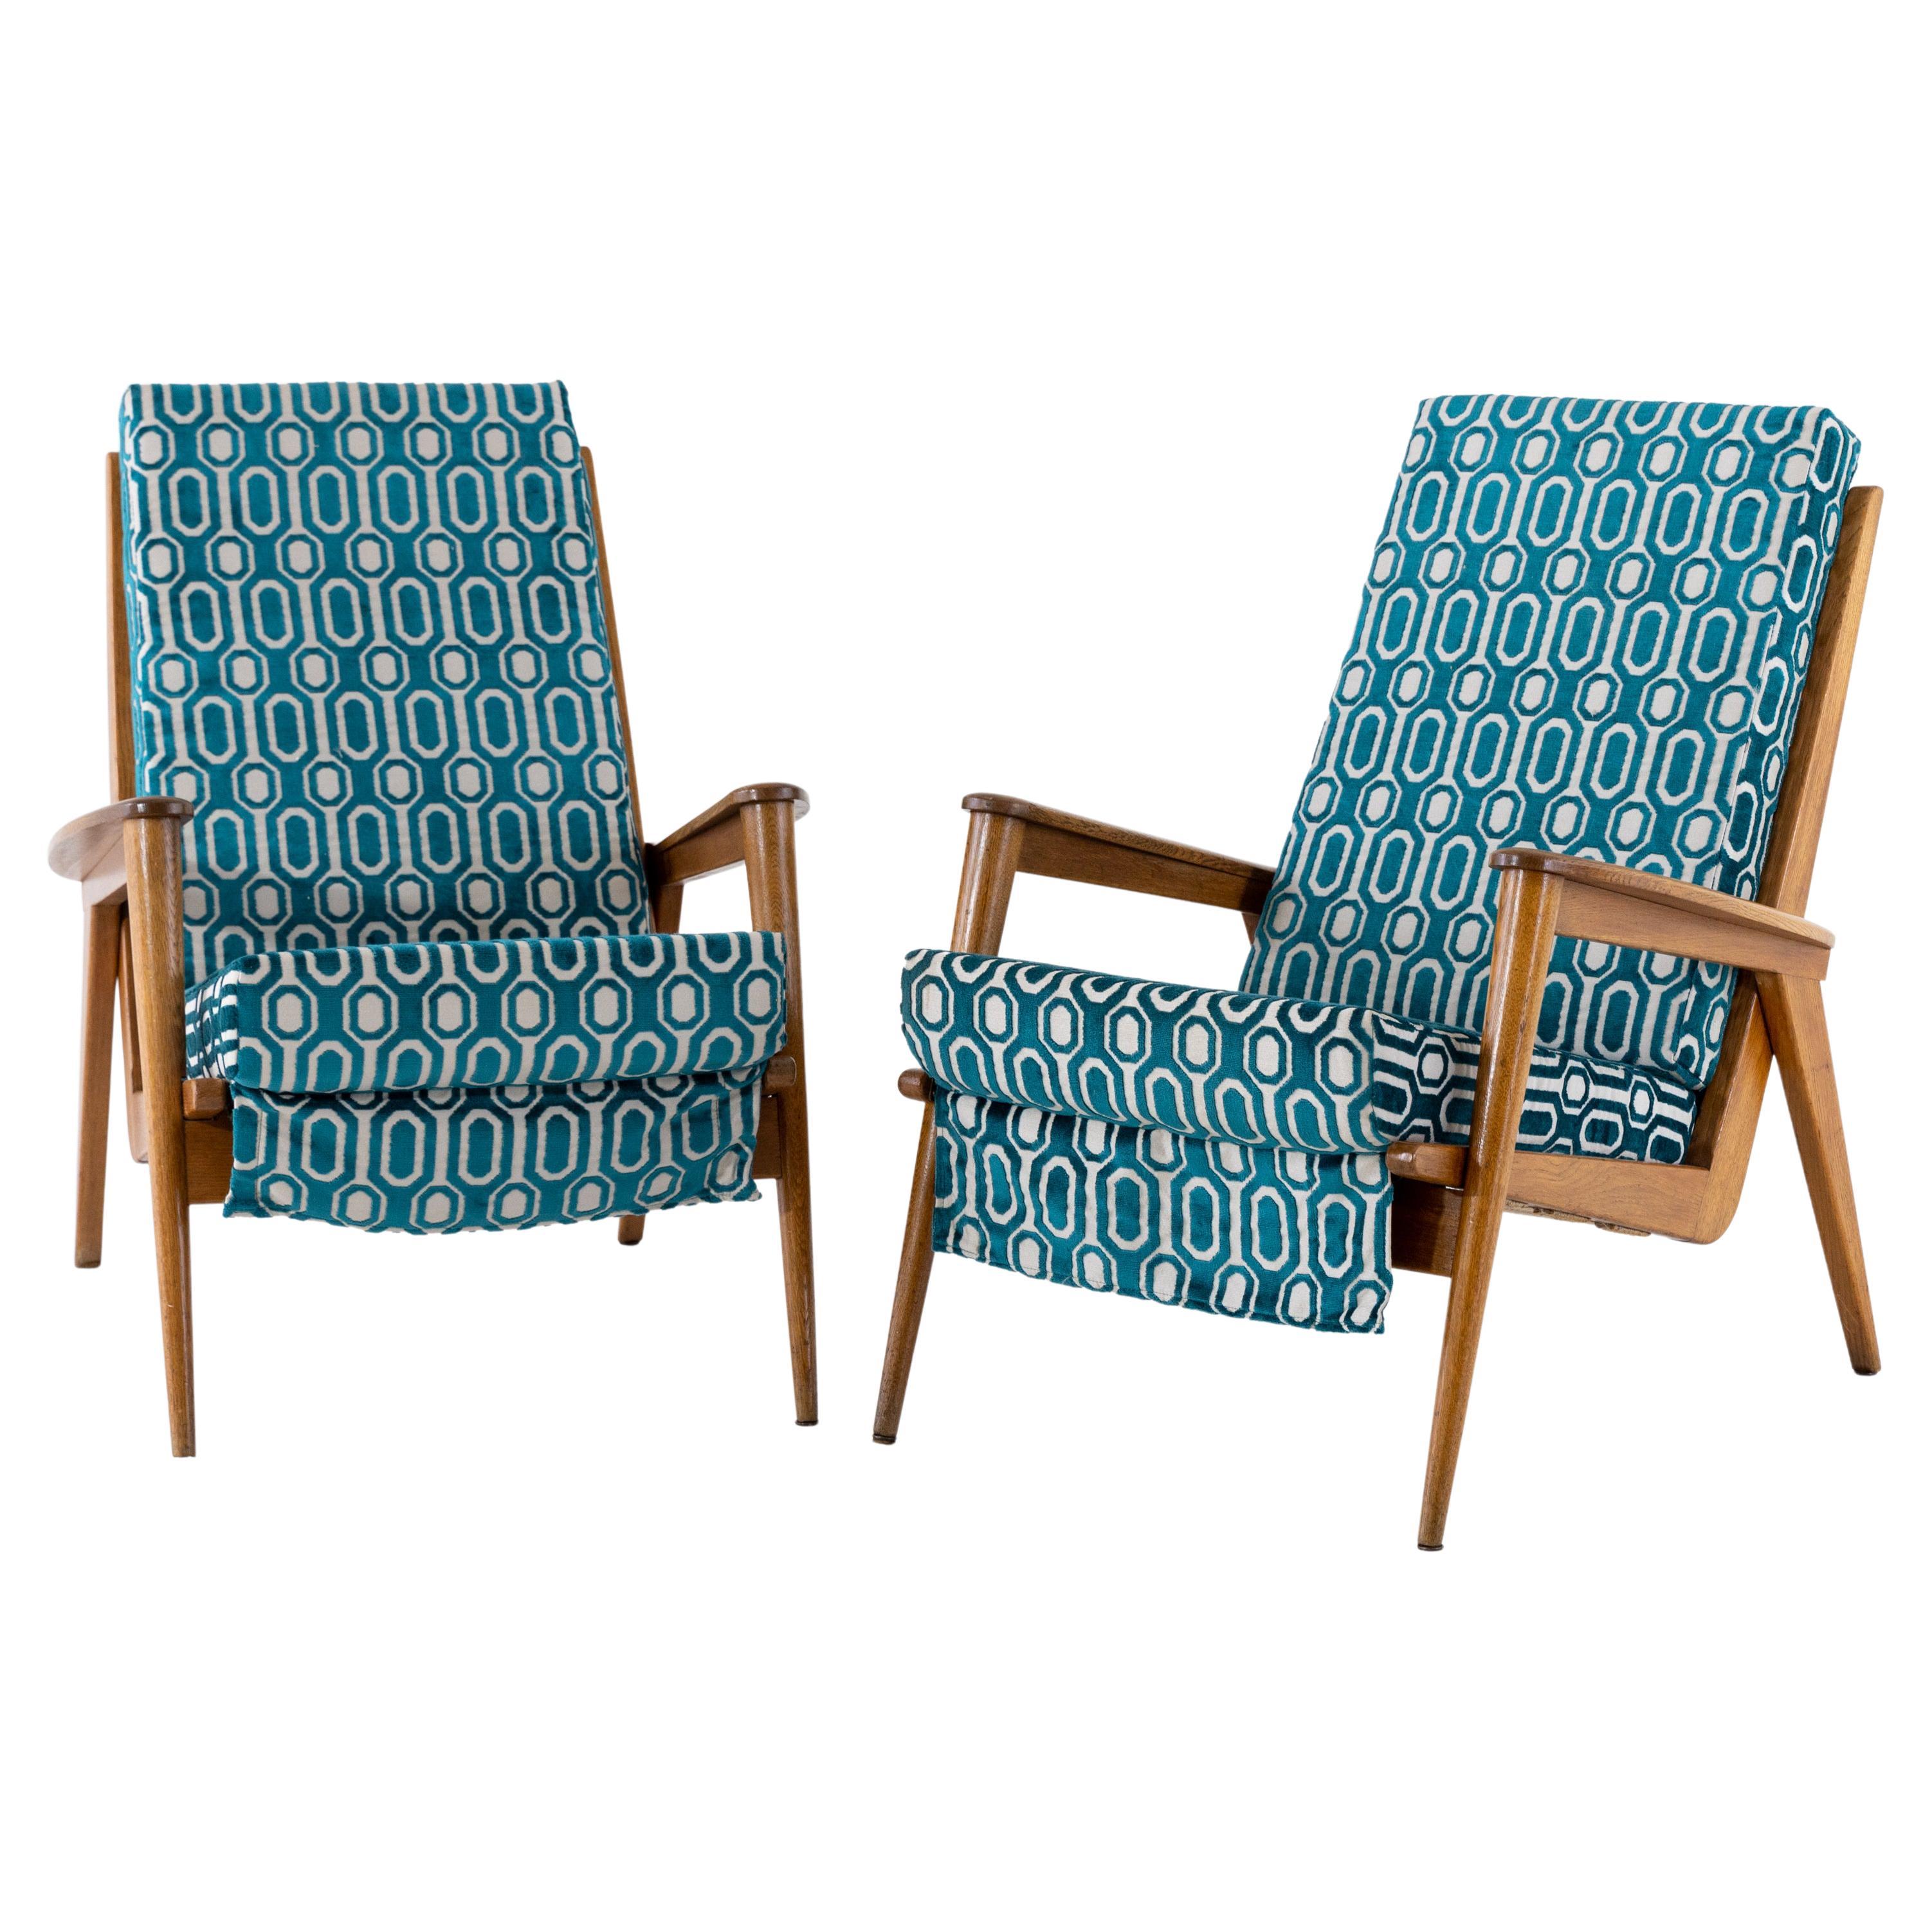 Pair of Italian Lounge Chairs, Mid-20th Century